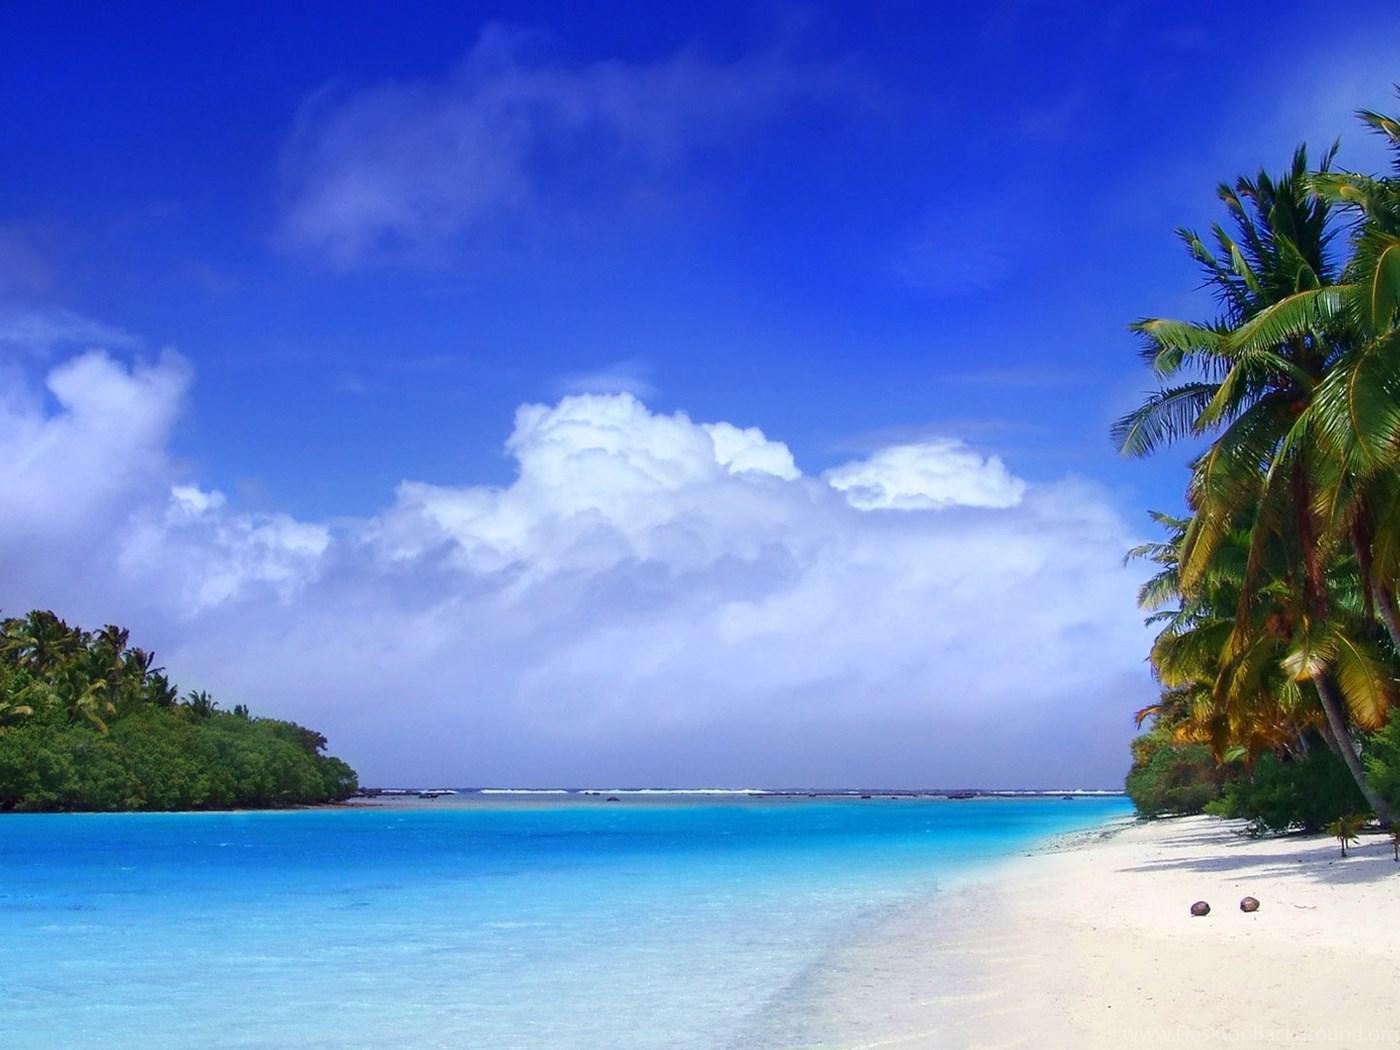 Tropical Rainforest Wallpaper, Beach Picture And Image Desktop